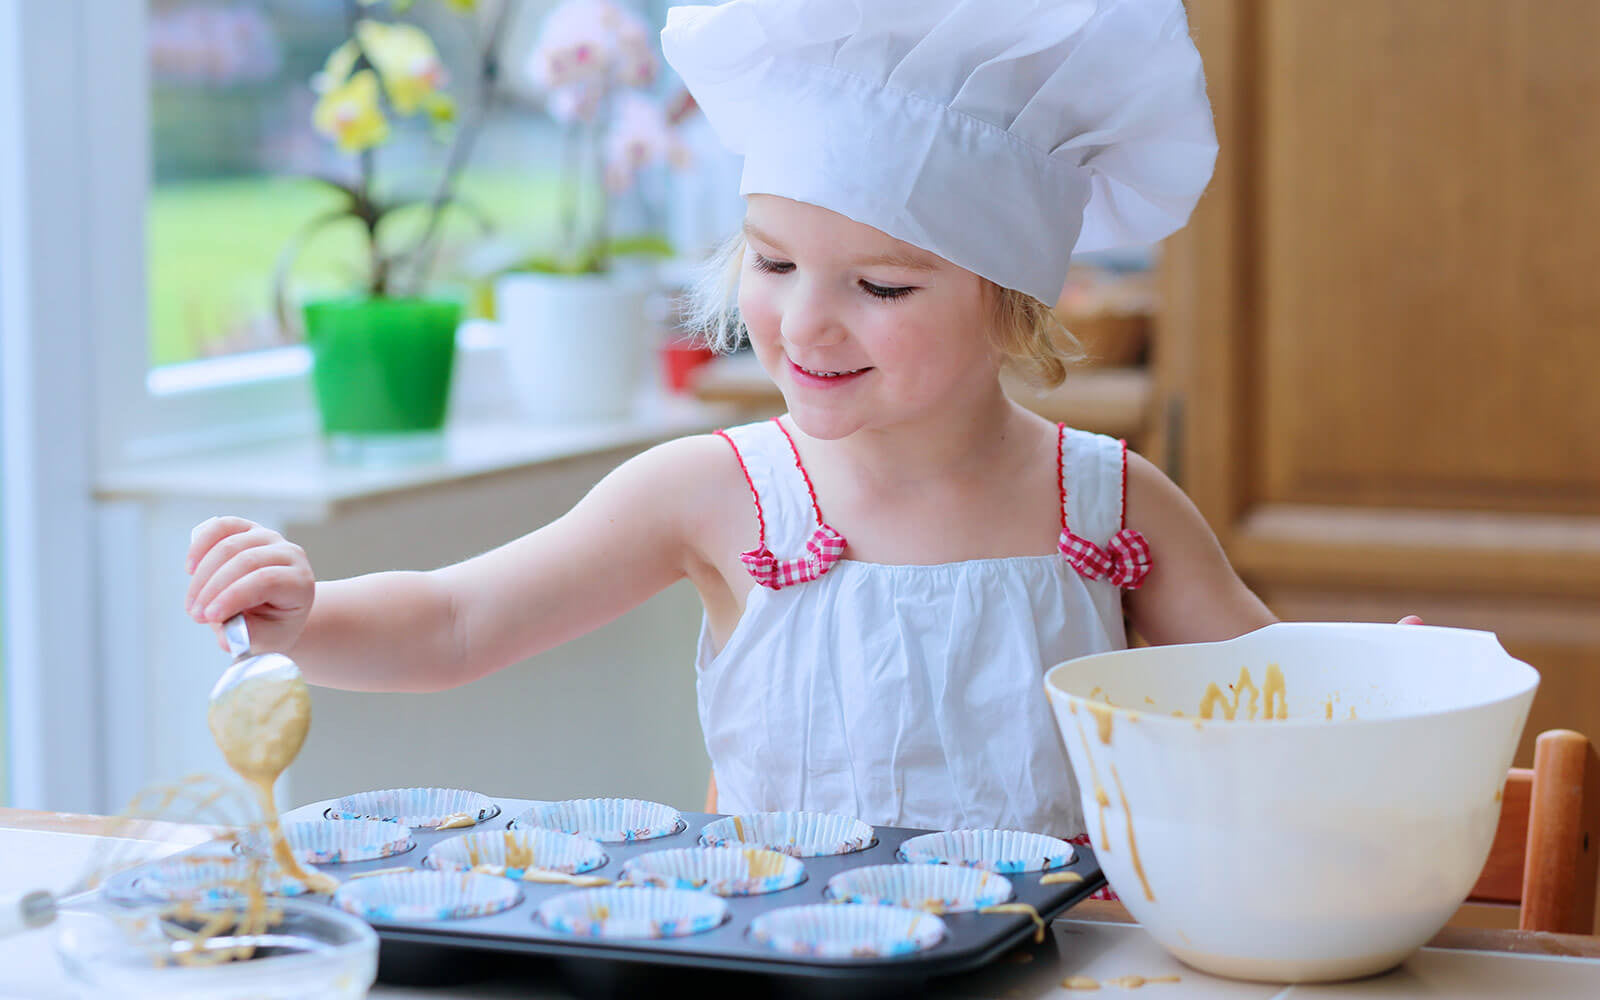 Kids love to bake cupcakes at home